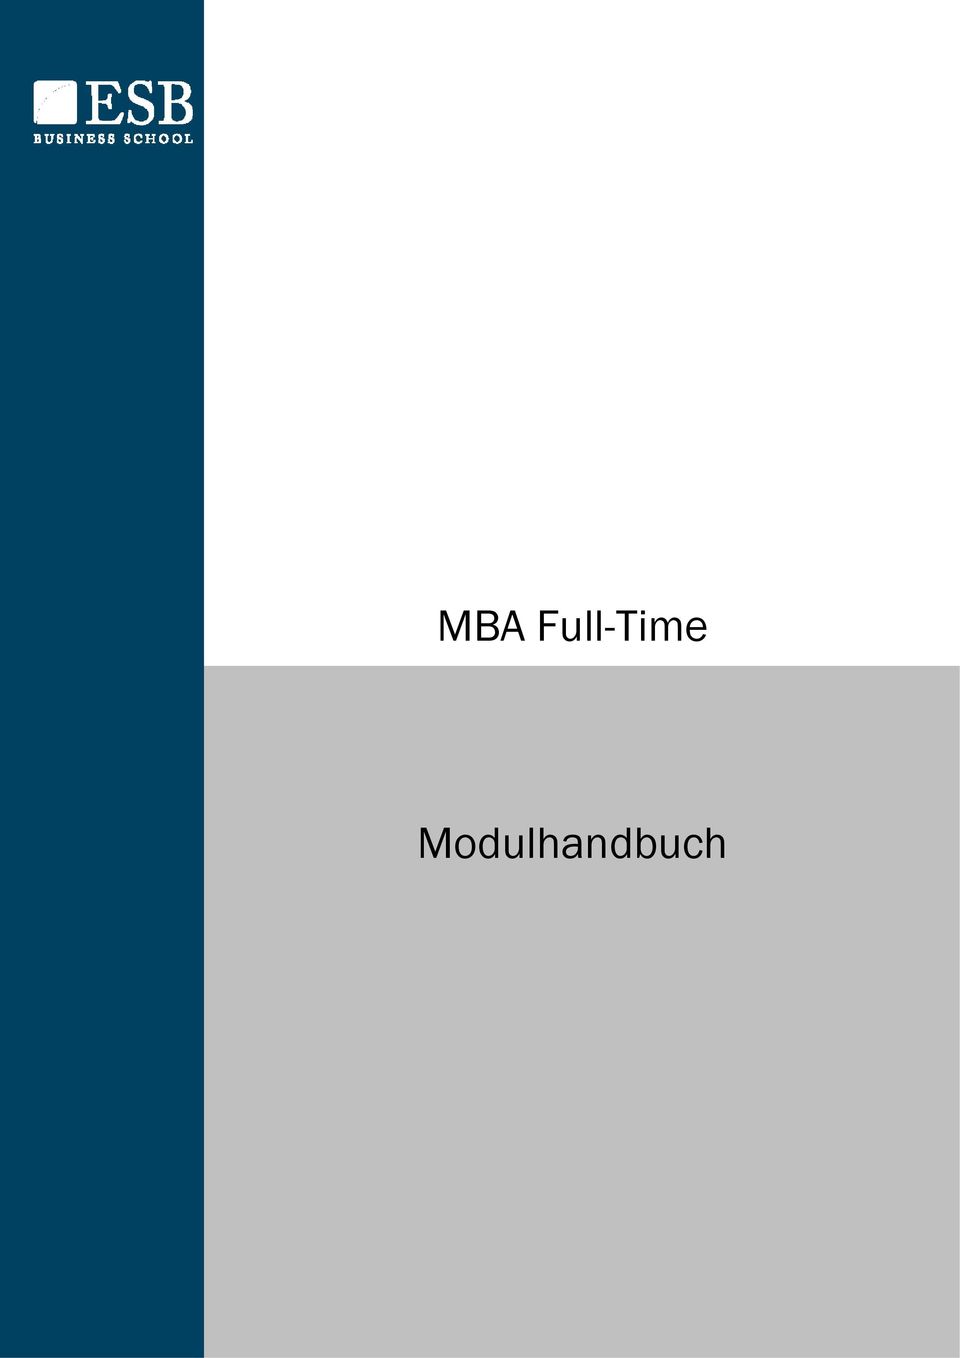 MBA Full- Time